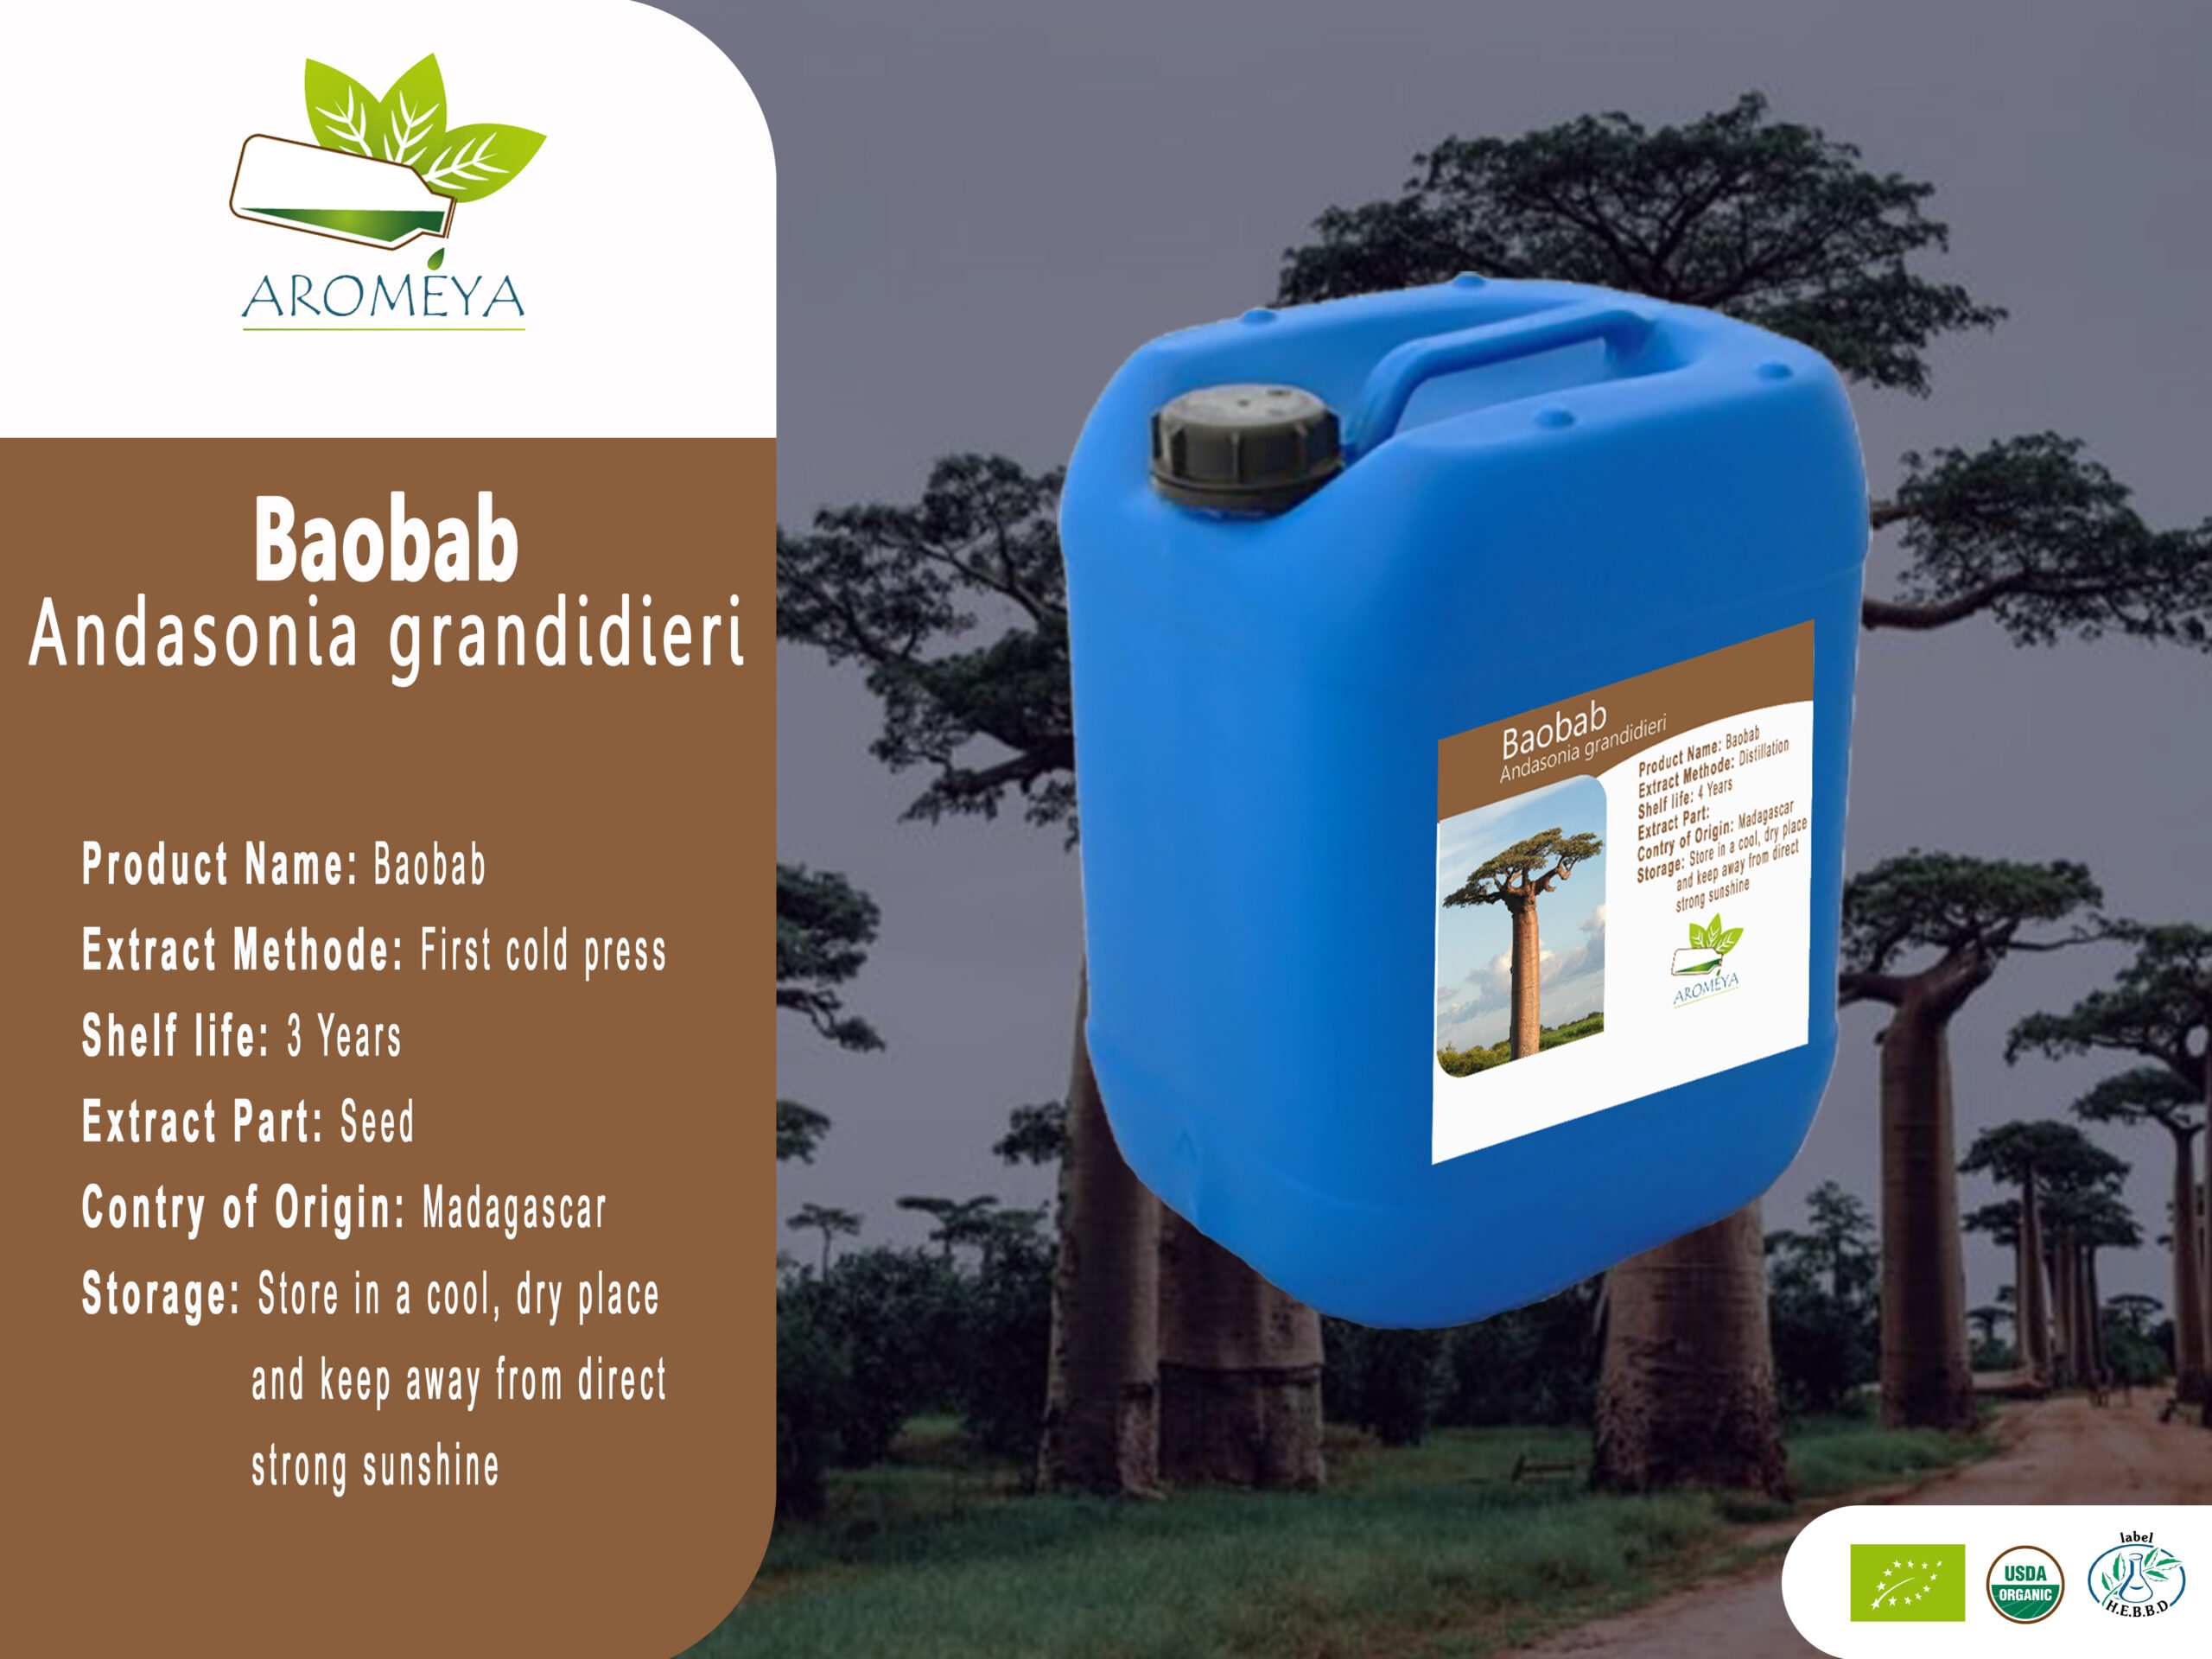 Huile végétale de Baobab // Baobab vegetable oil from Madagascar